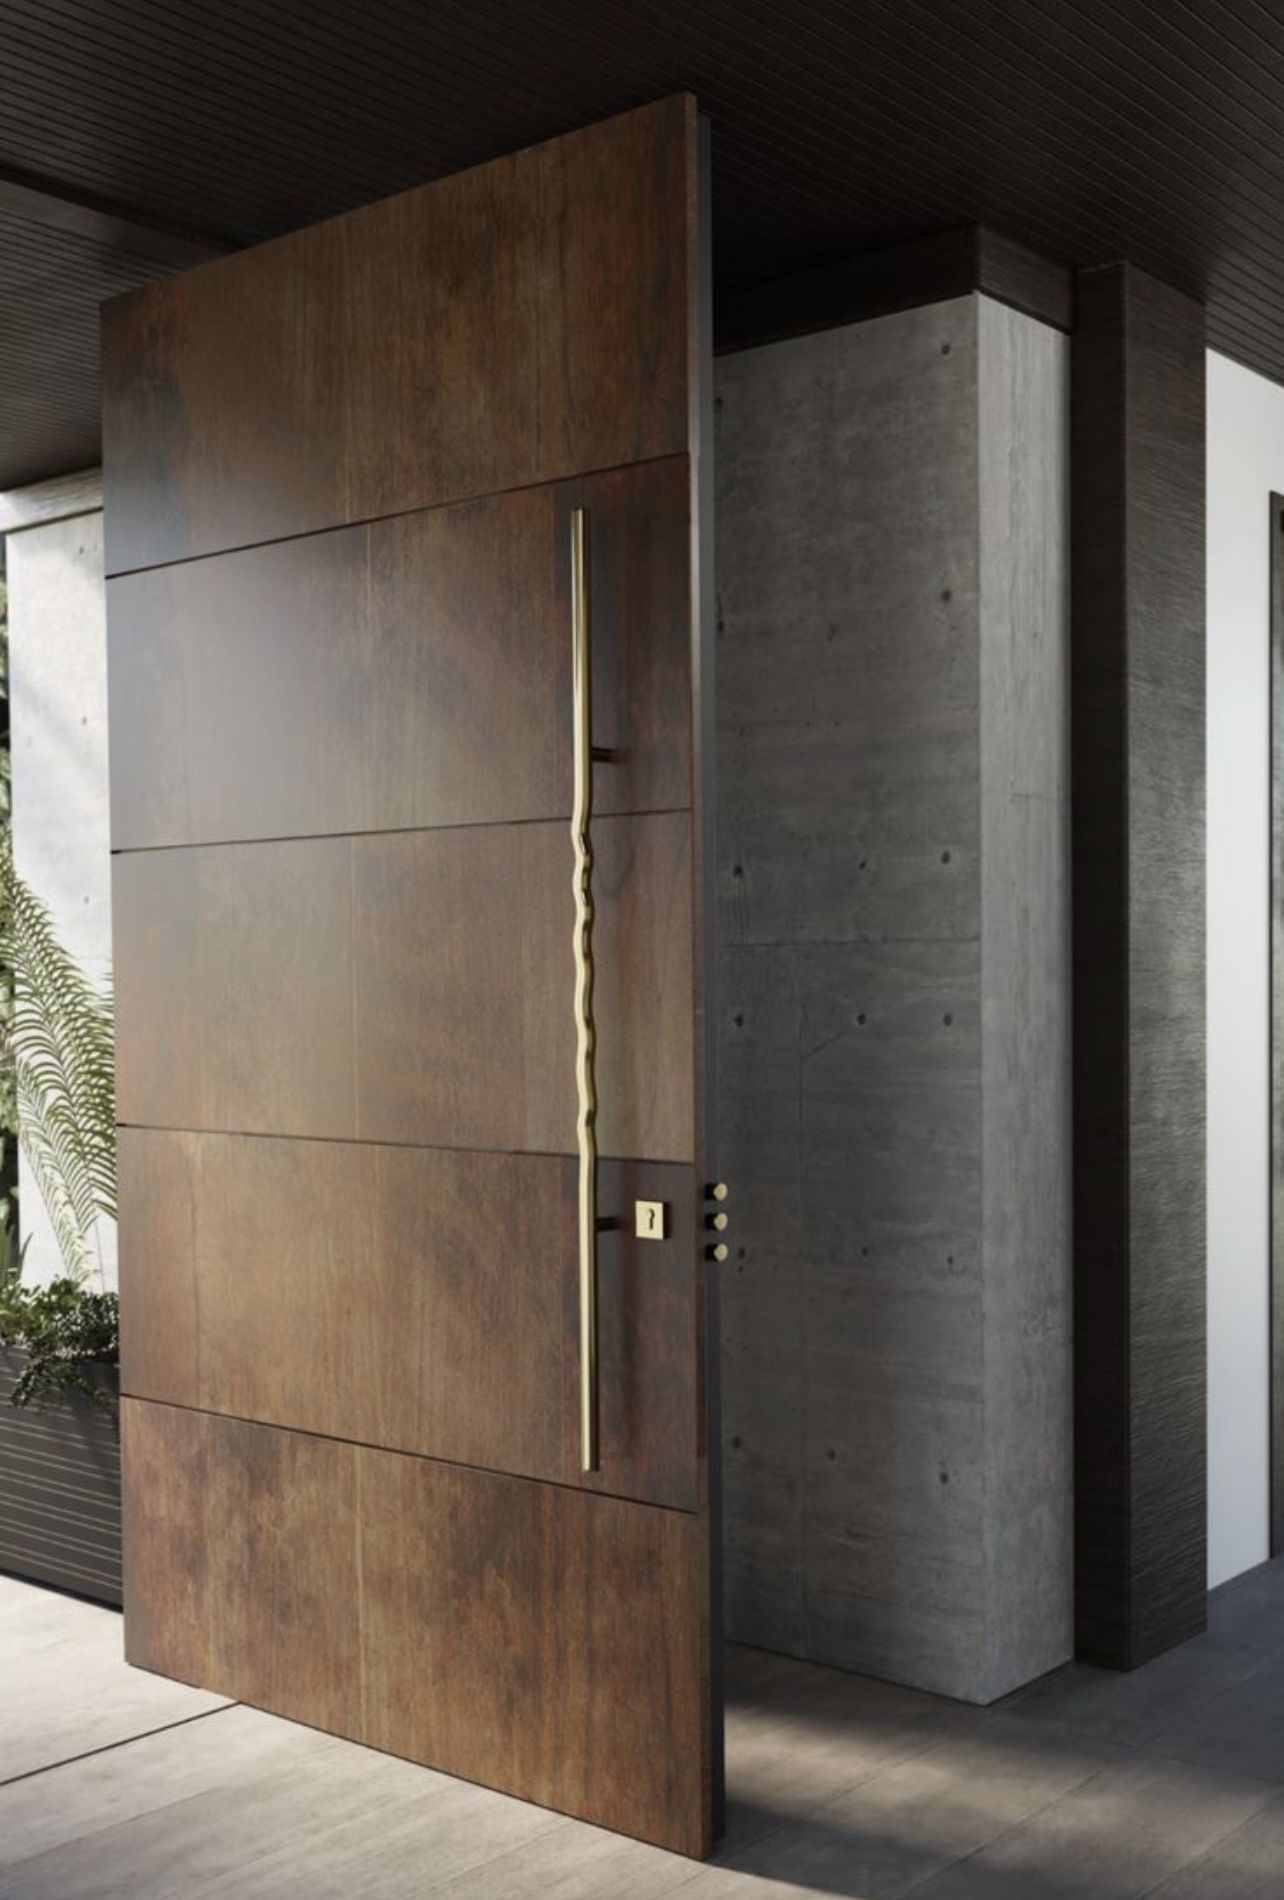 Welcoming Entryways: Front Door Designs That Make a Statement